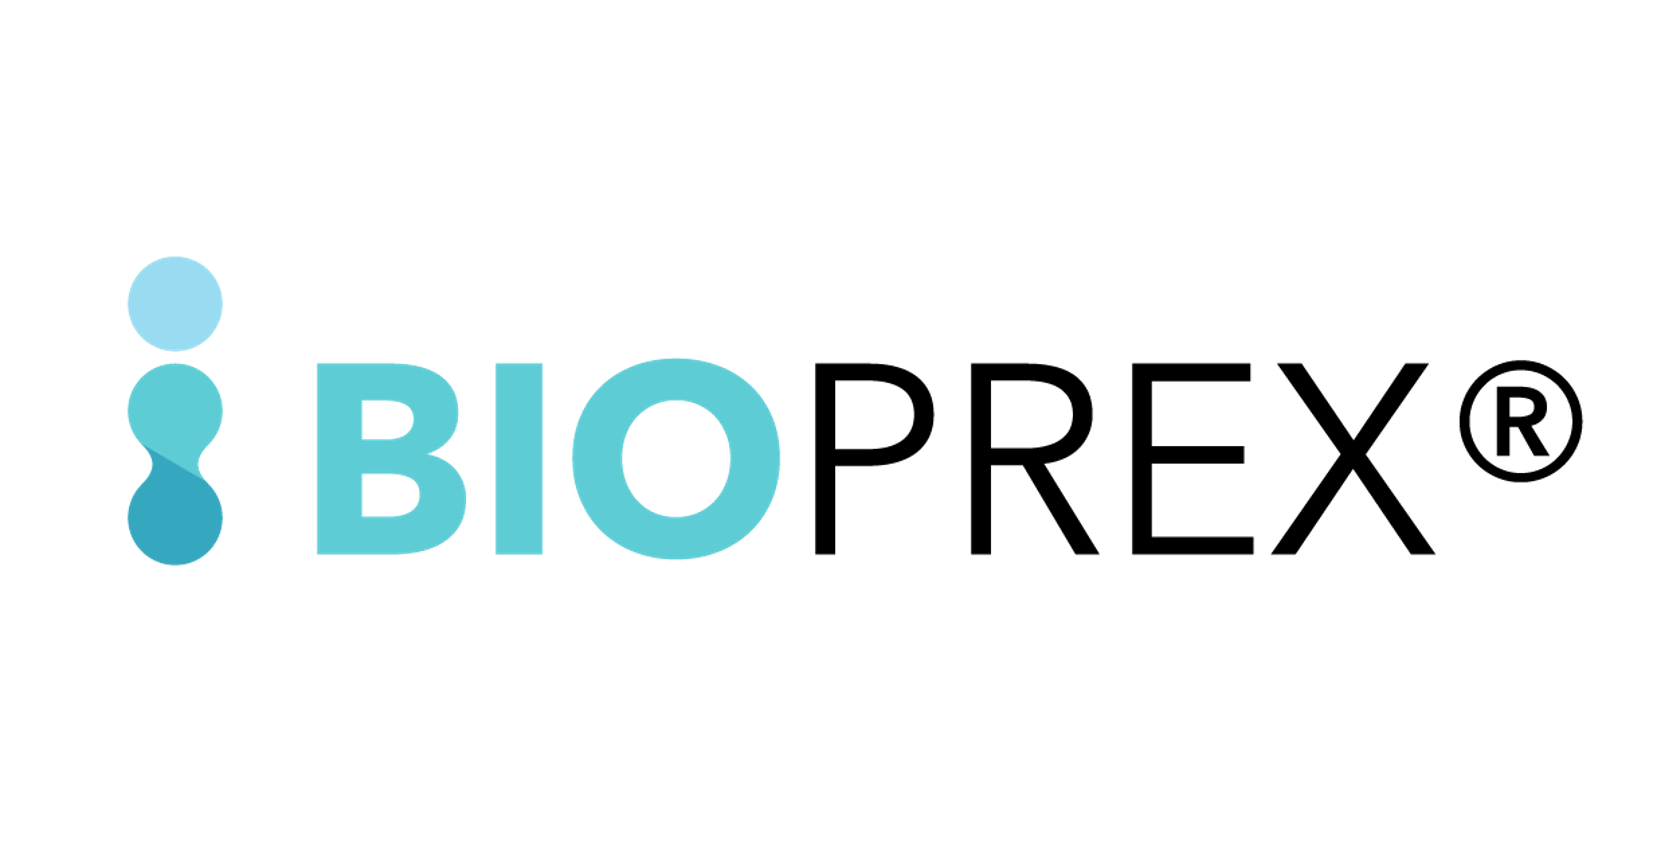 Bioprex-logo-1.png